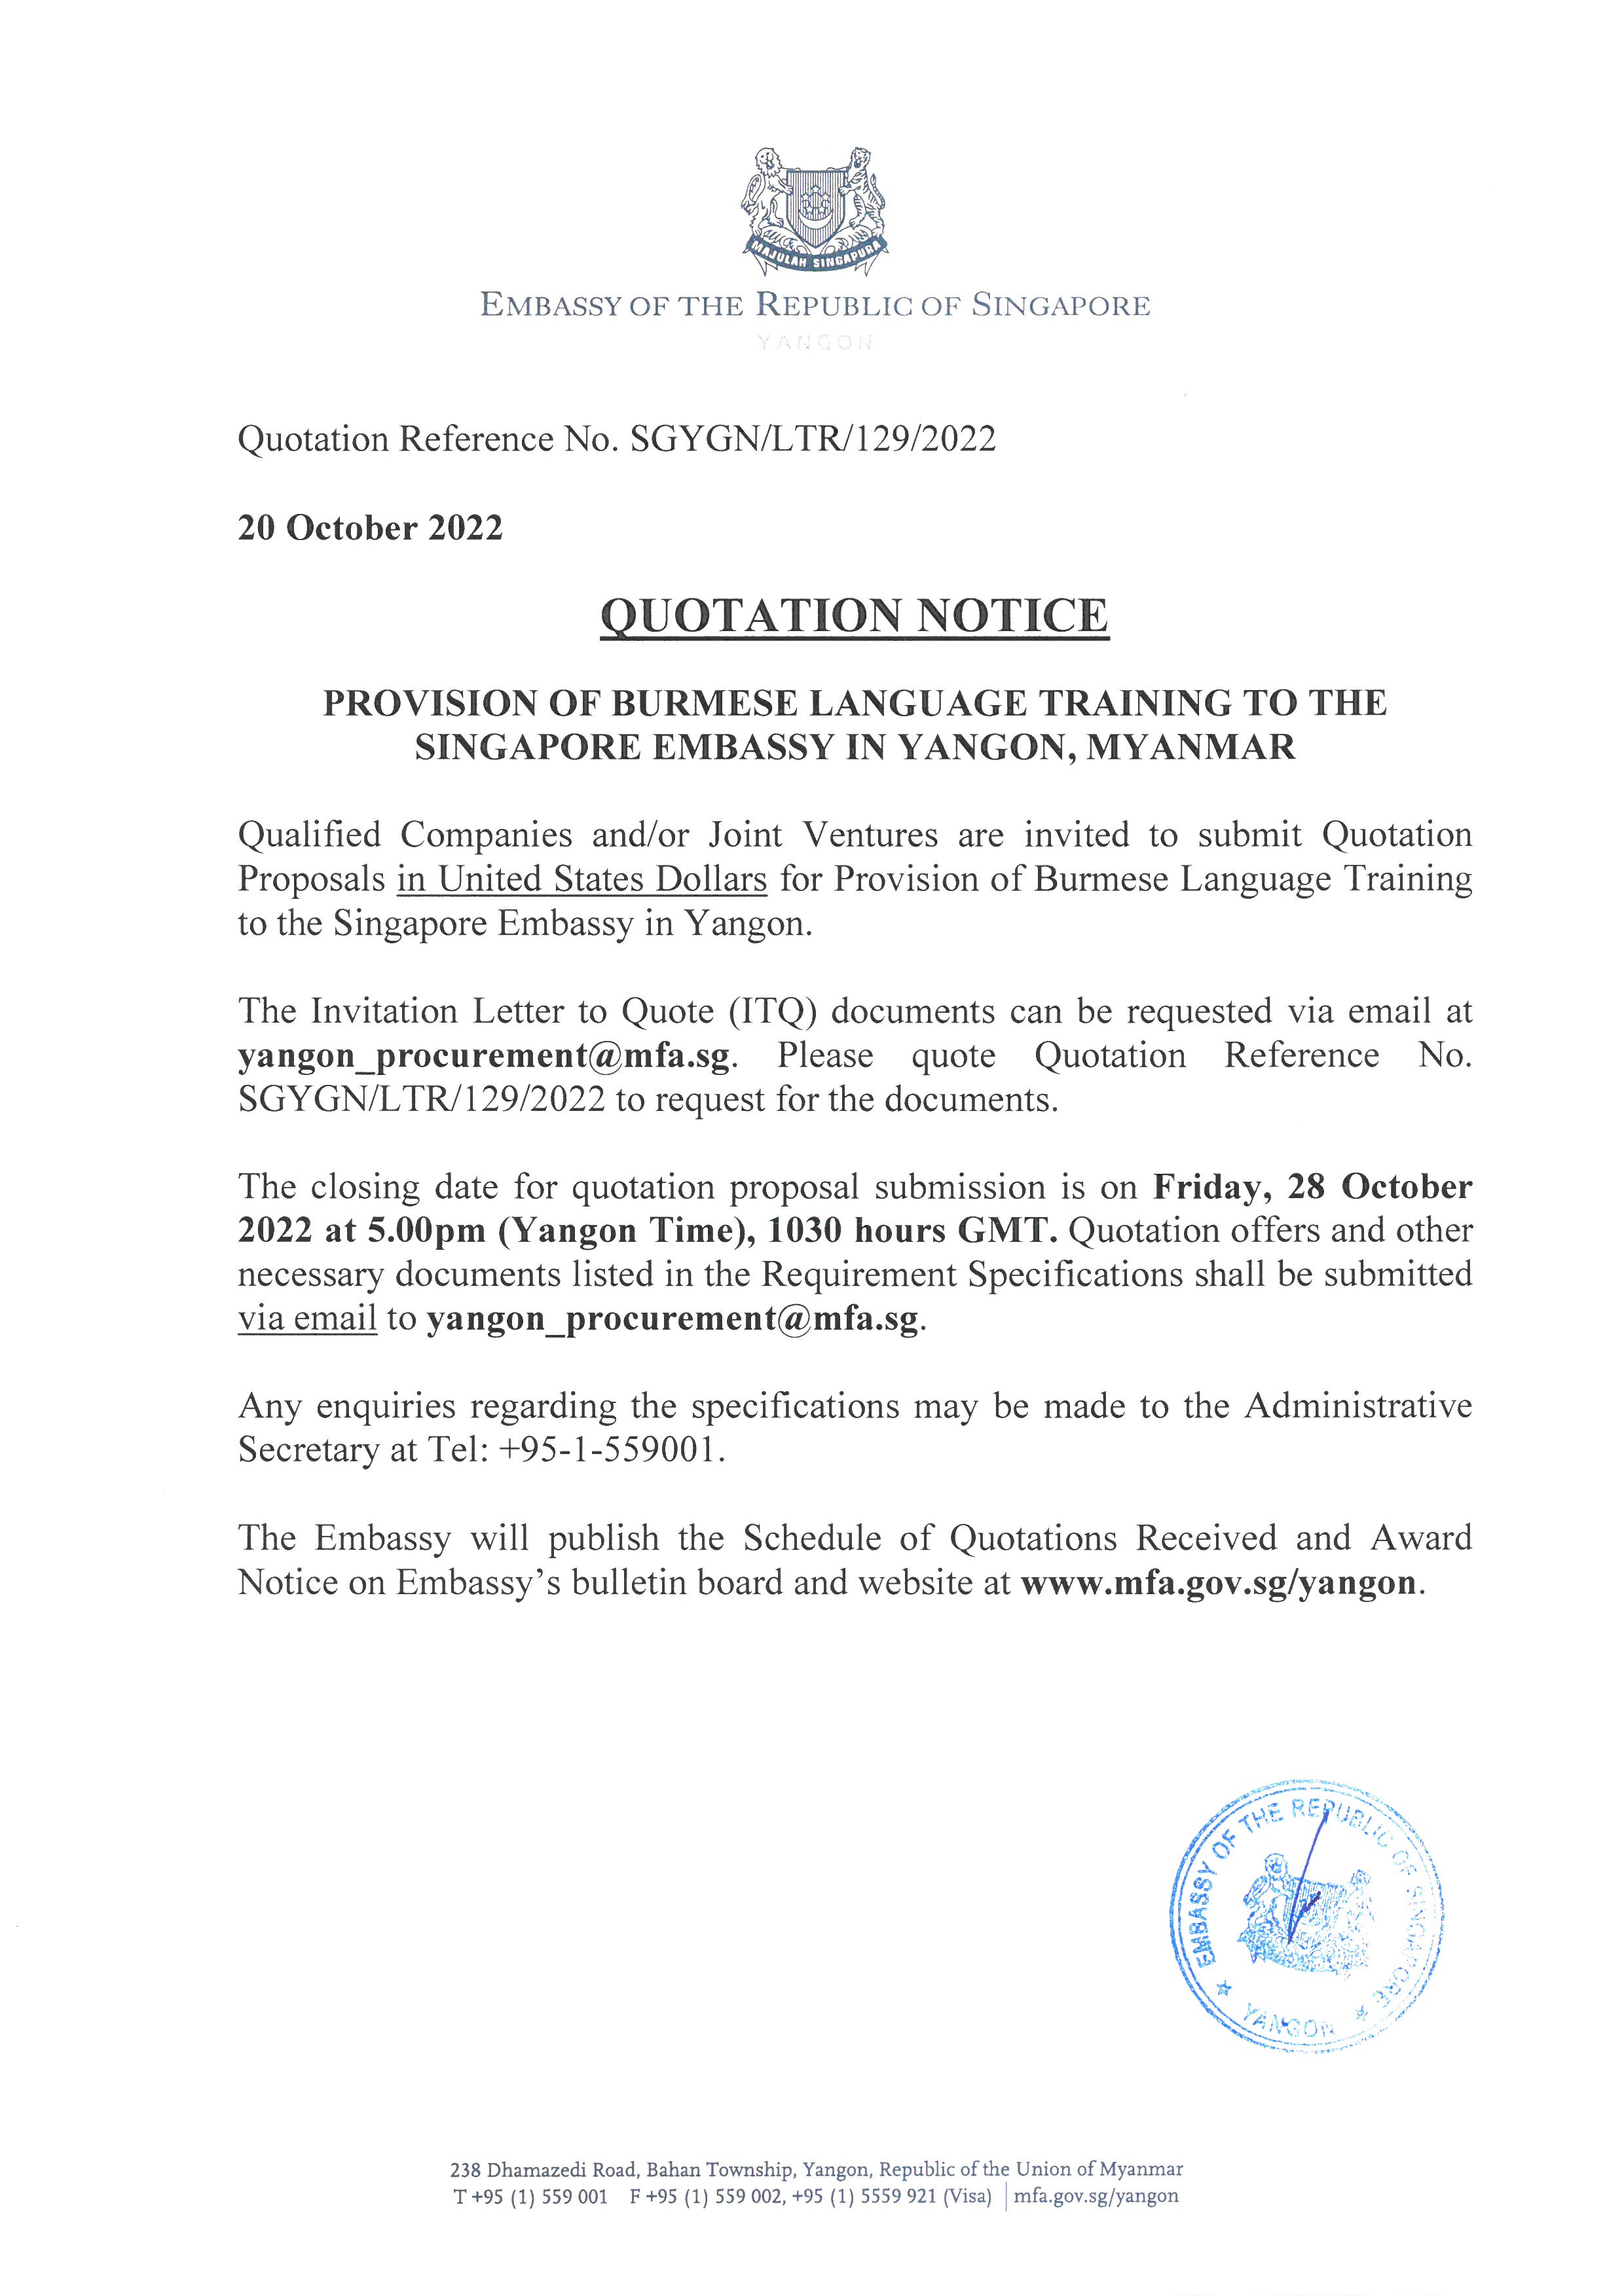 Burmese Language Training ITQ - Quotation Notice (2)